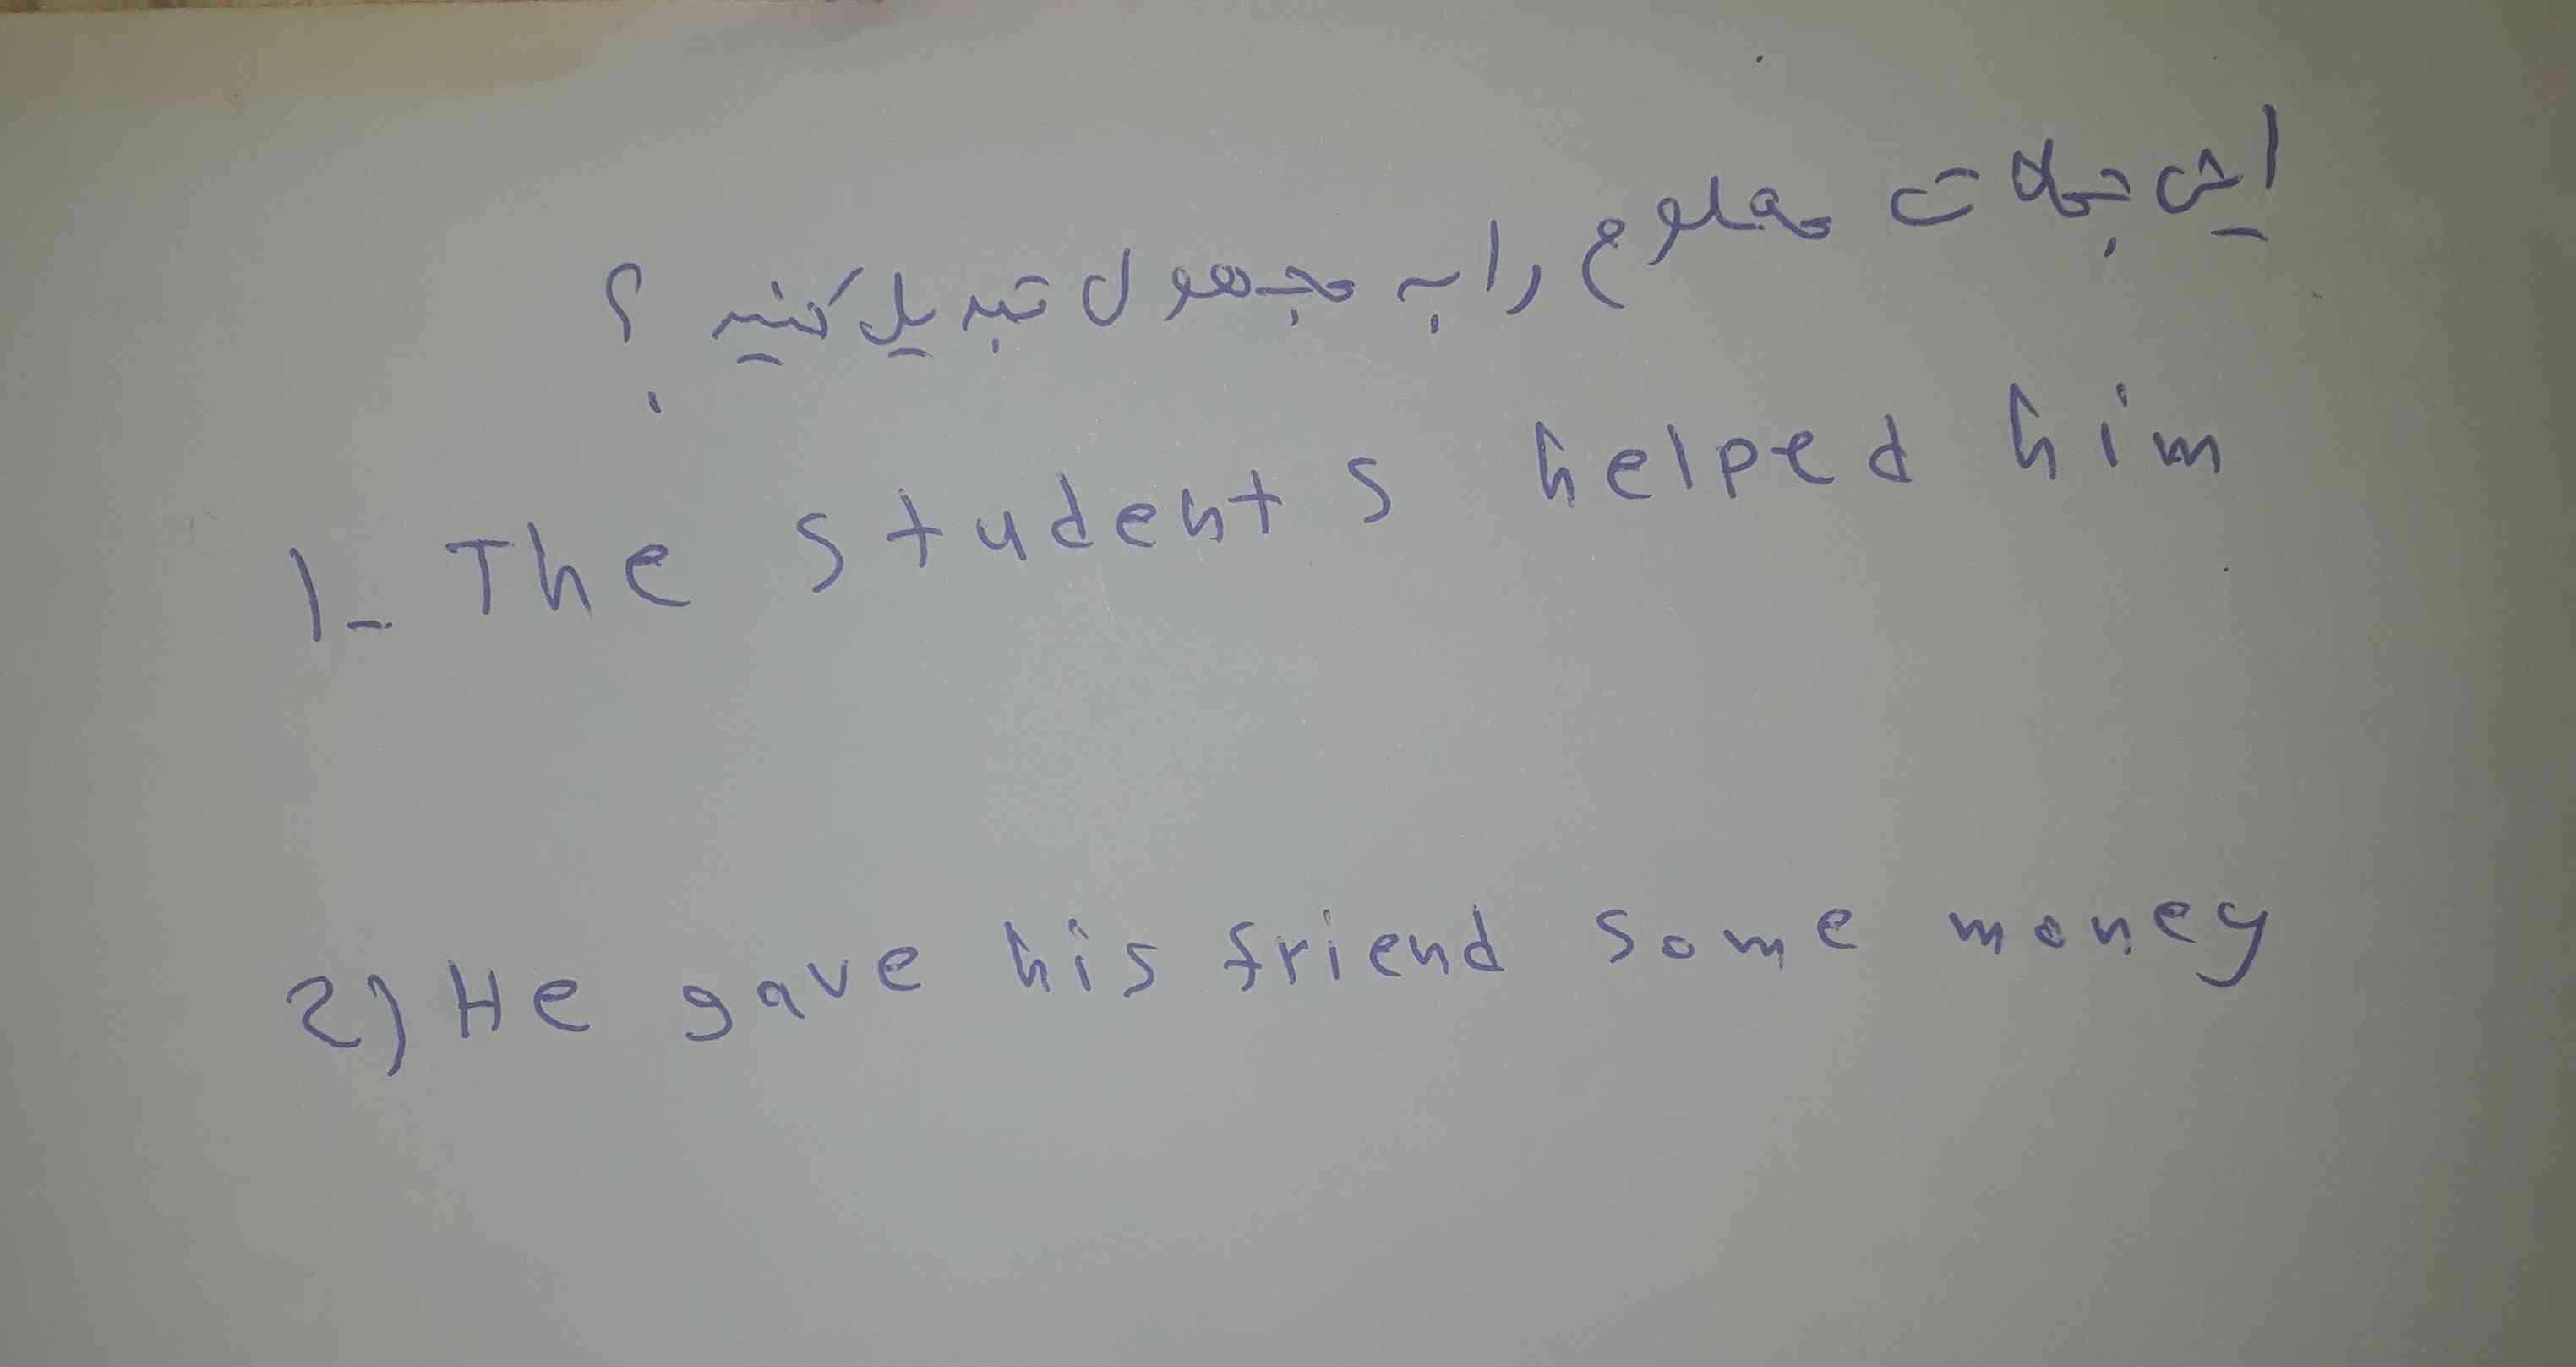 1.The students helped him 
2.He gave his friend some money
این جملات معلوم را به مجهول تبدیل کنید? 
فقط خیلی زود ممنون میشم